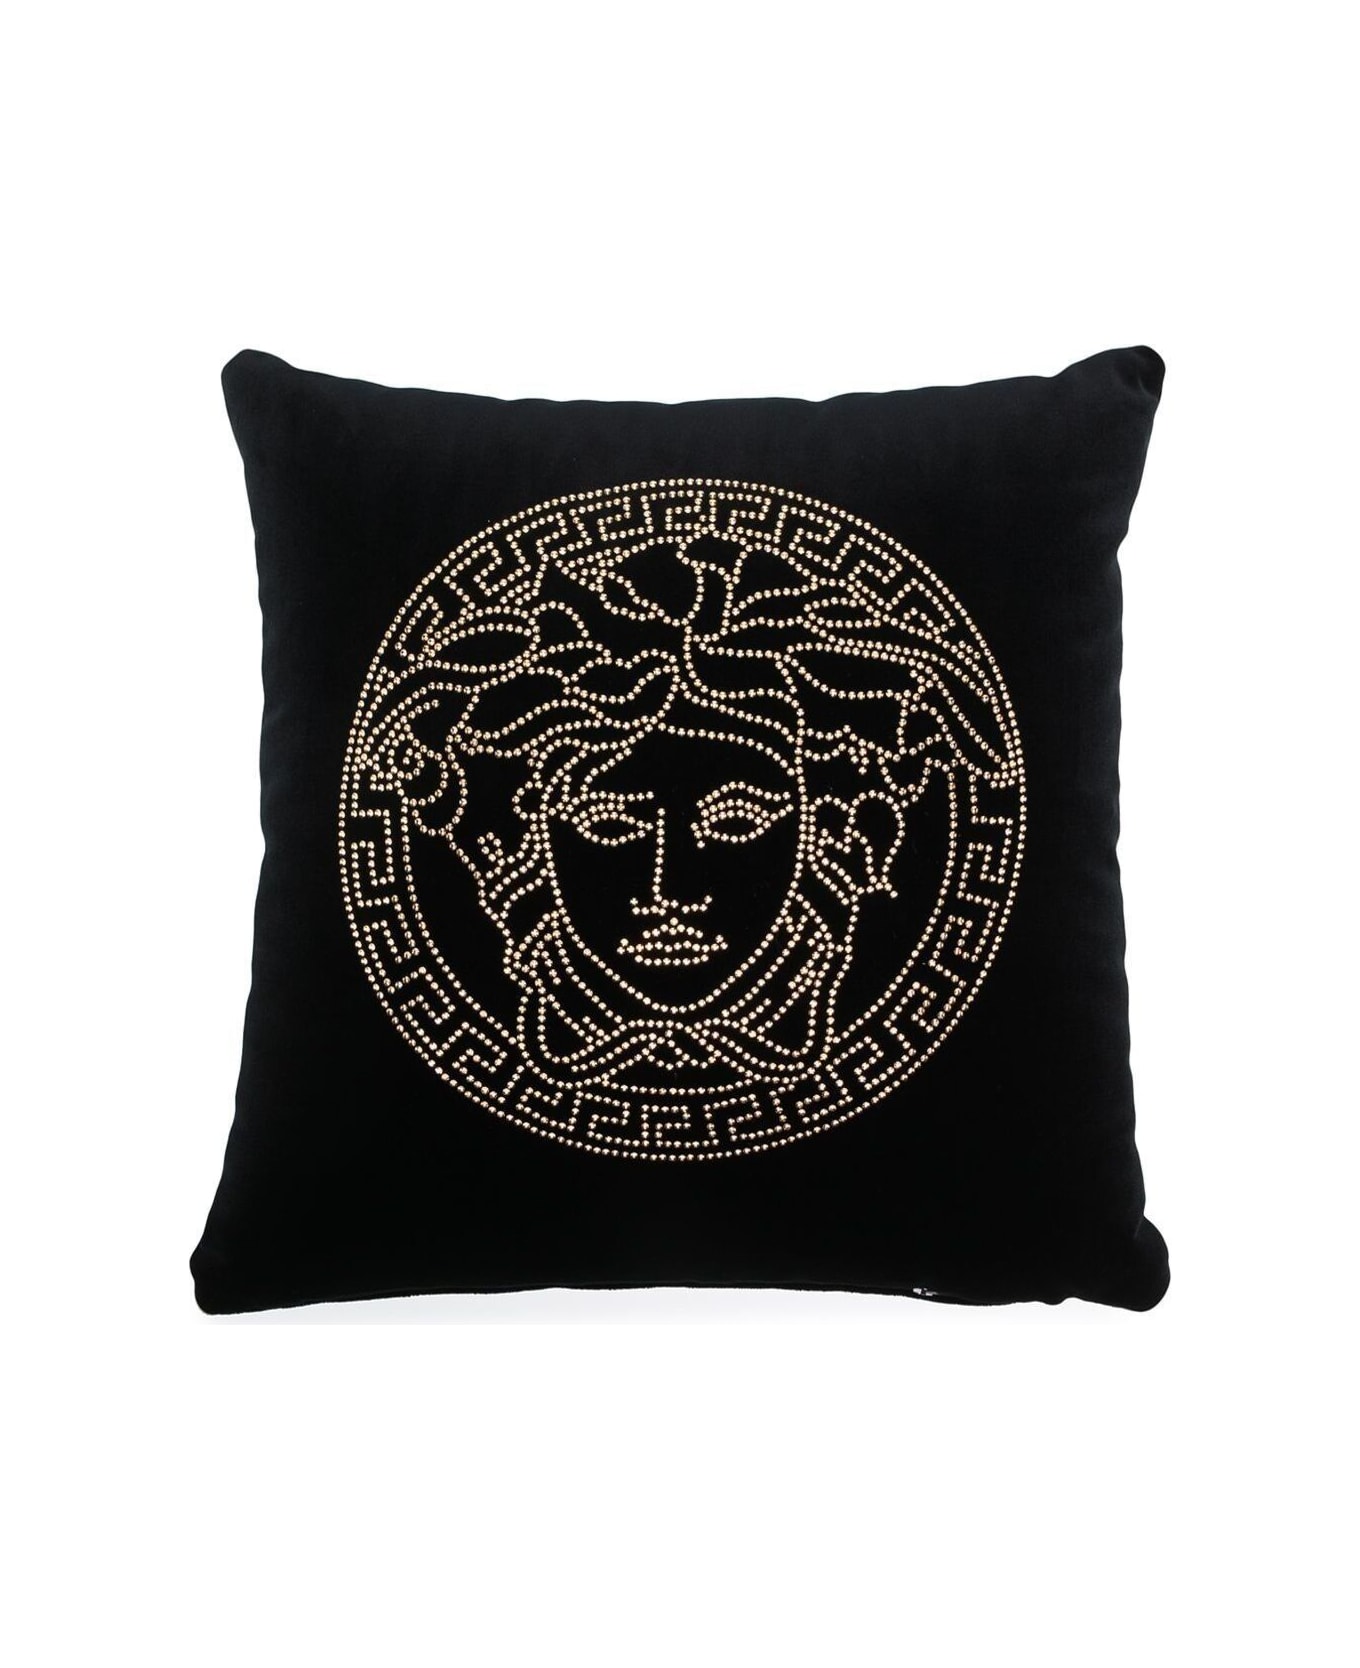 Versace Black Velvet Pillow With Gold Rhinestone Decoration Representing The Versace Logo - Black